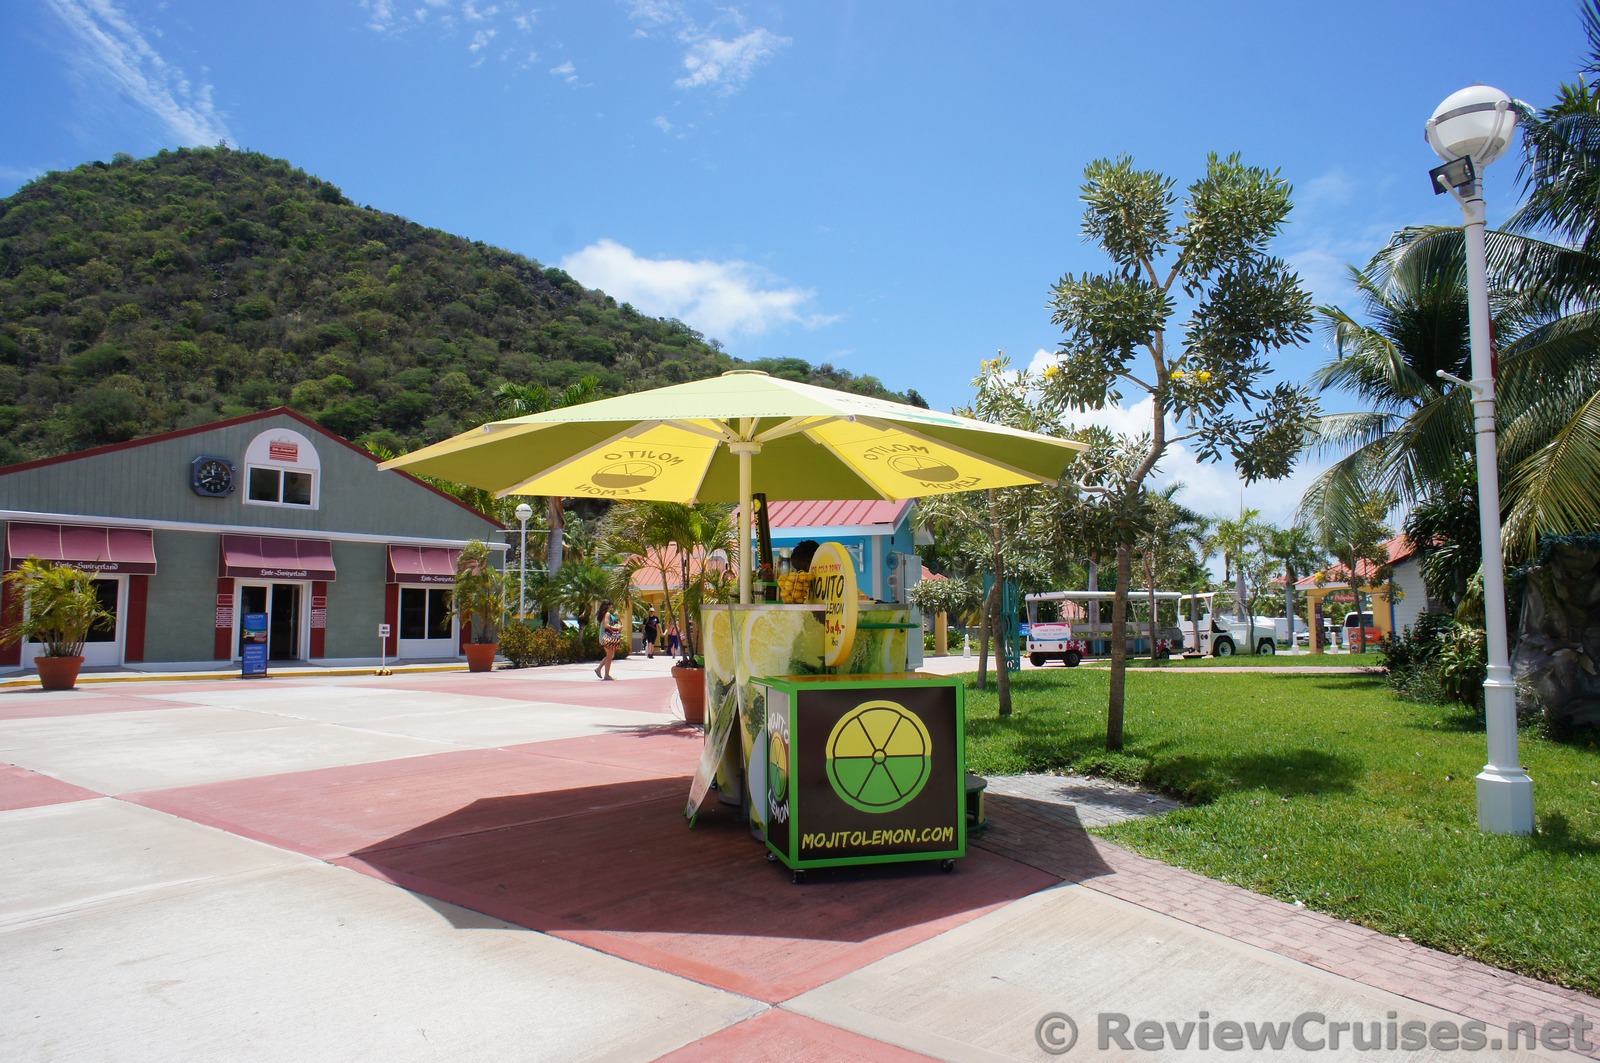 Mojito Lemon stand at Port of St Maarten.jpg
